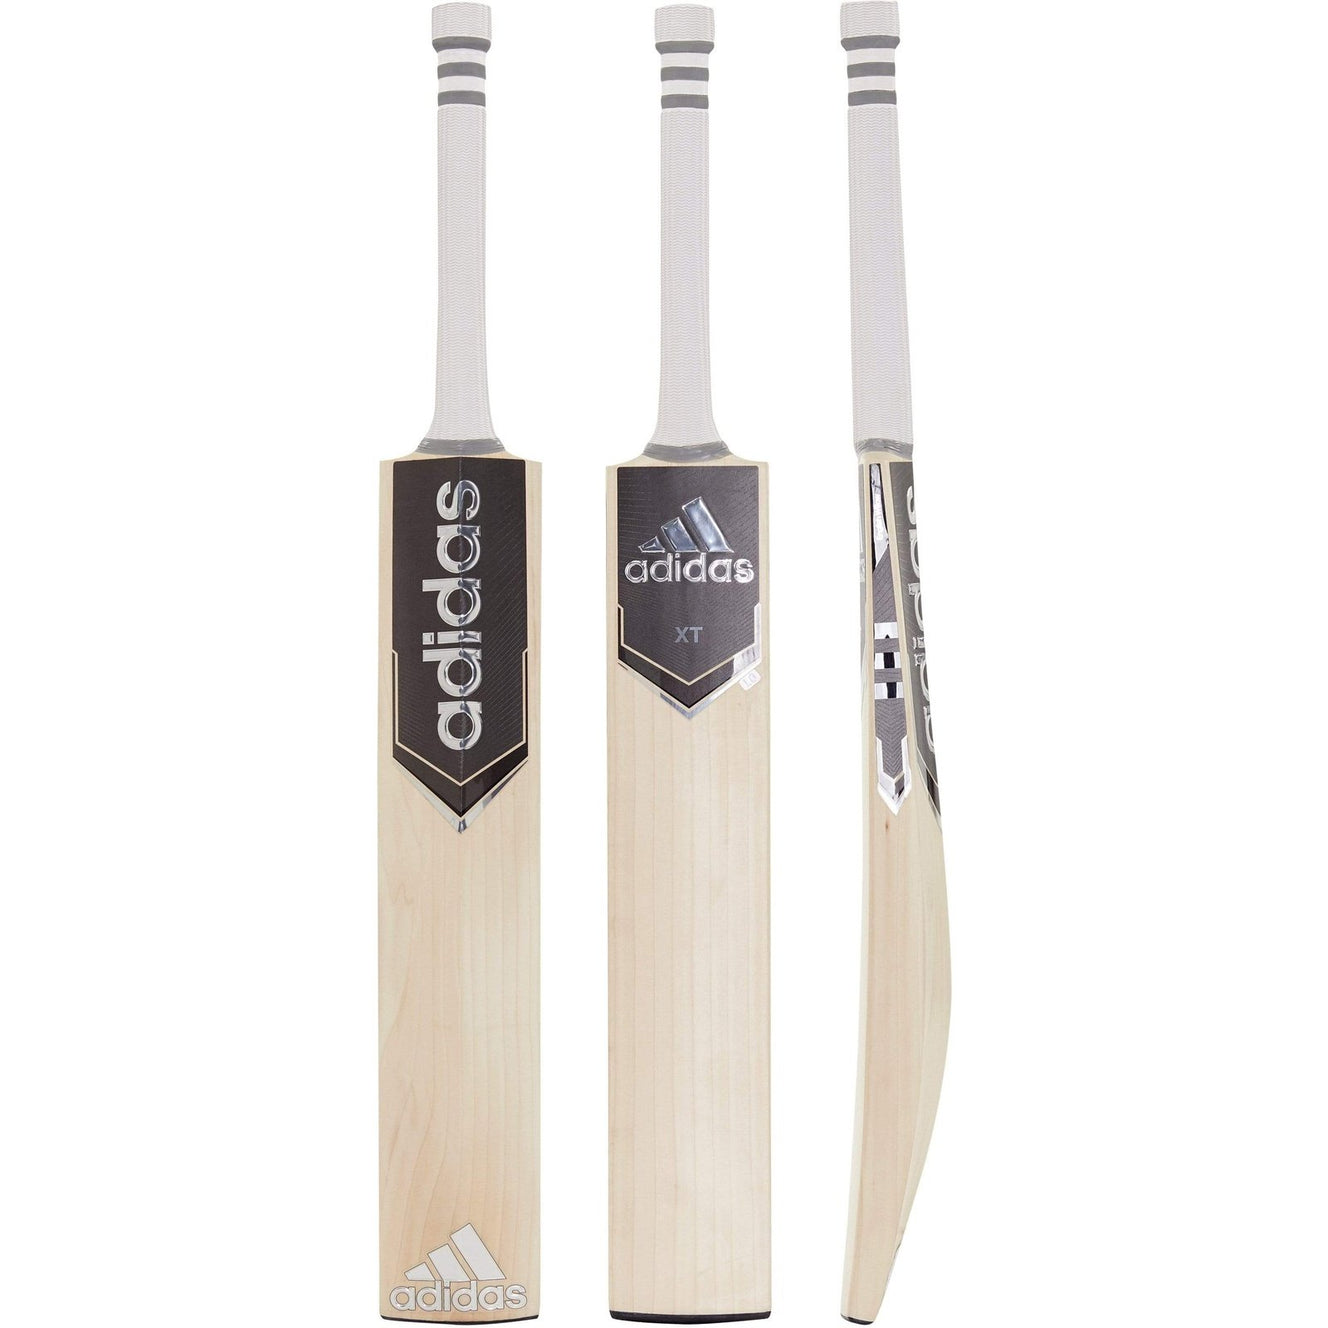 Adidas Cricket Bats SH / 2.7 Adidas Xt Grey 3.0 Senior Cricket Bat